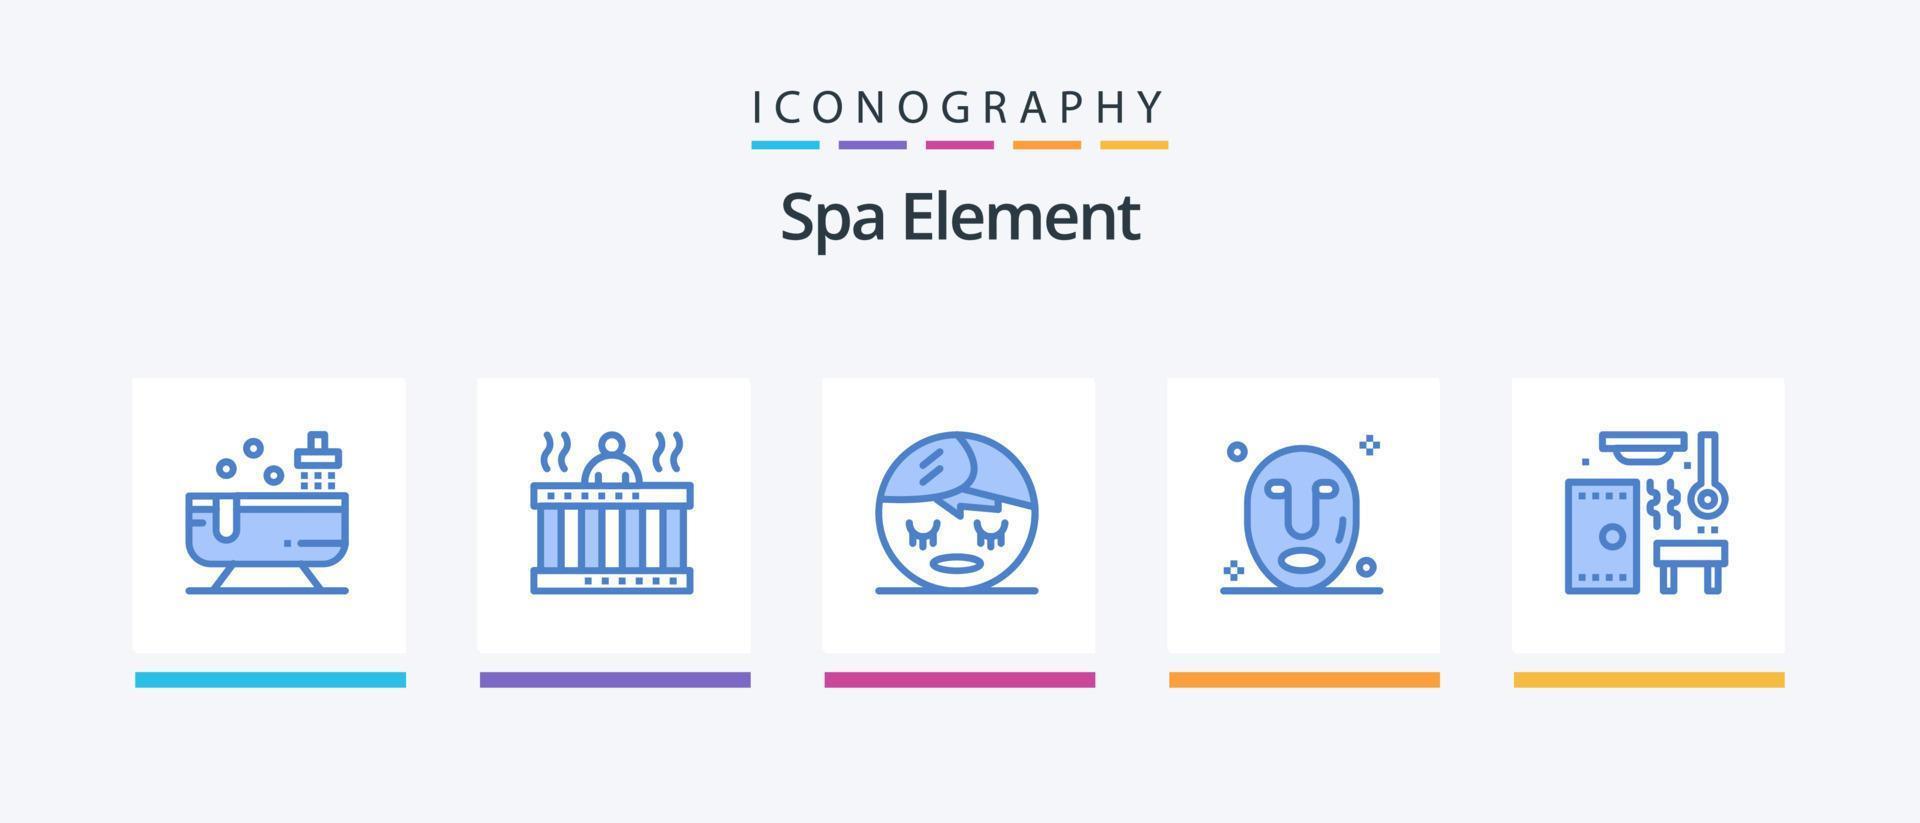 pack d'icônes bleu élément spa 5 comprenant un sauna. chaud. ressorts. spa. faciale. conception d'icônes créatives vecteur